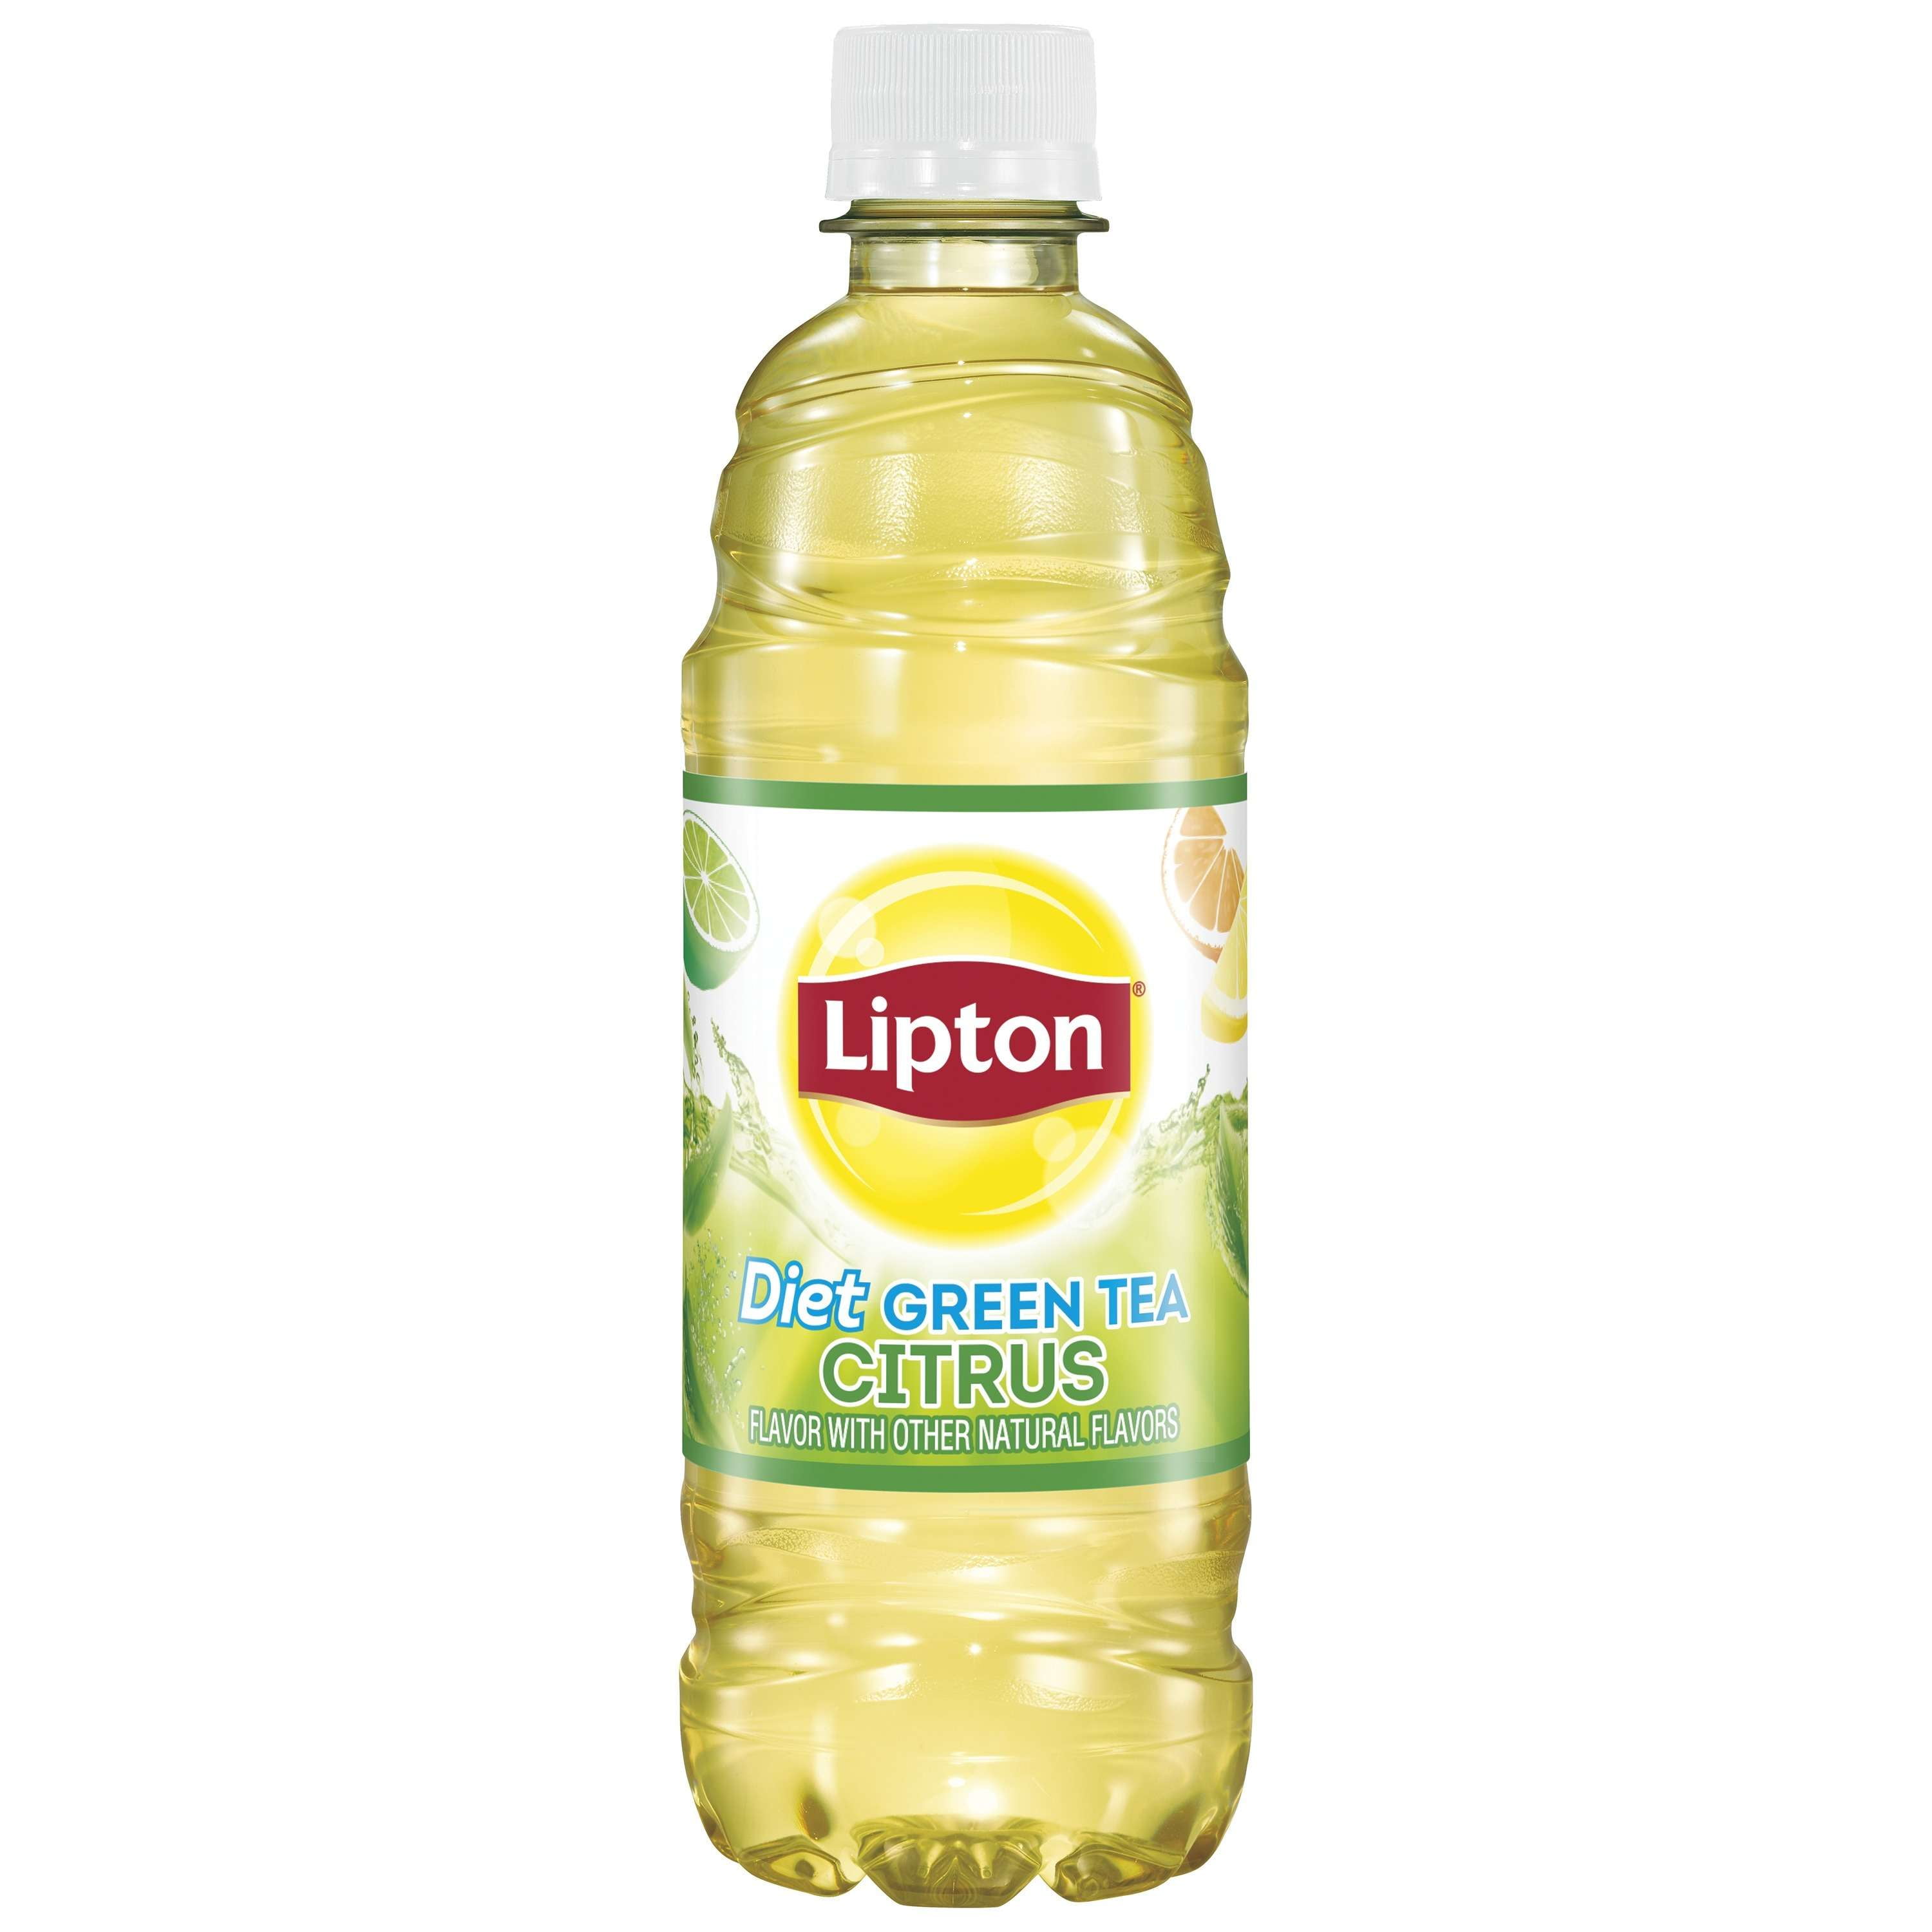 does lipton citrus green tea have caffeine